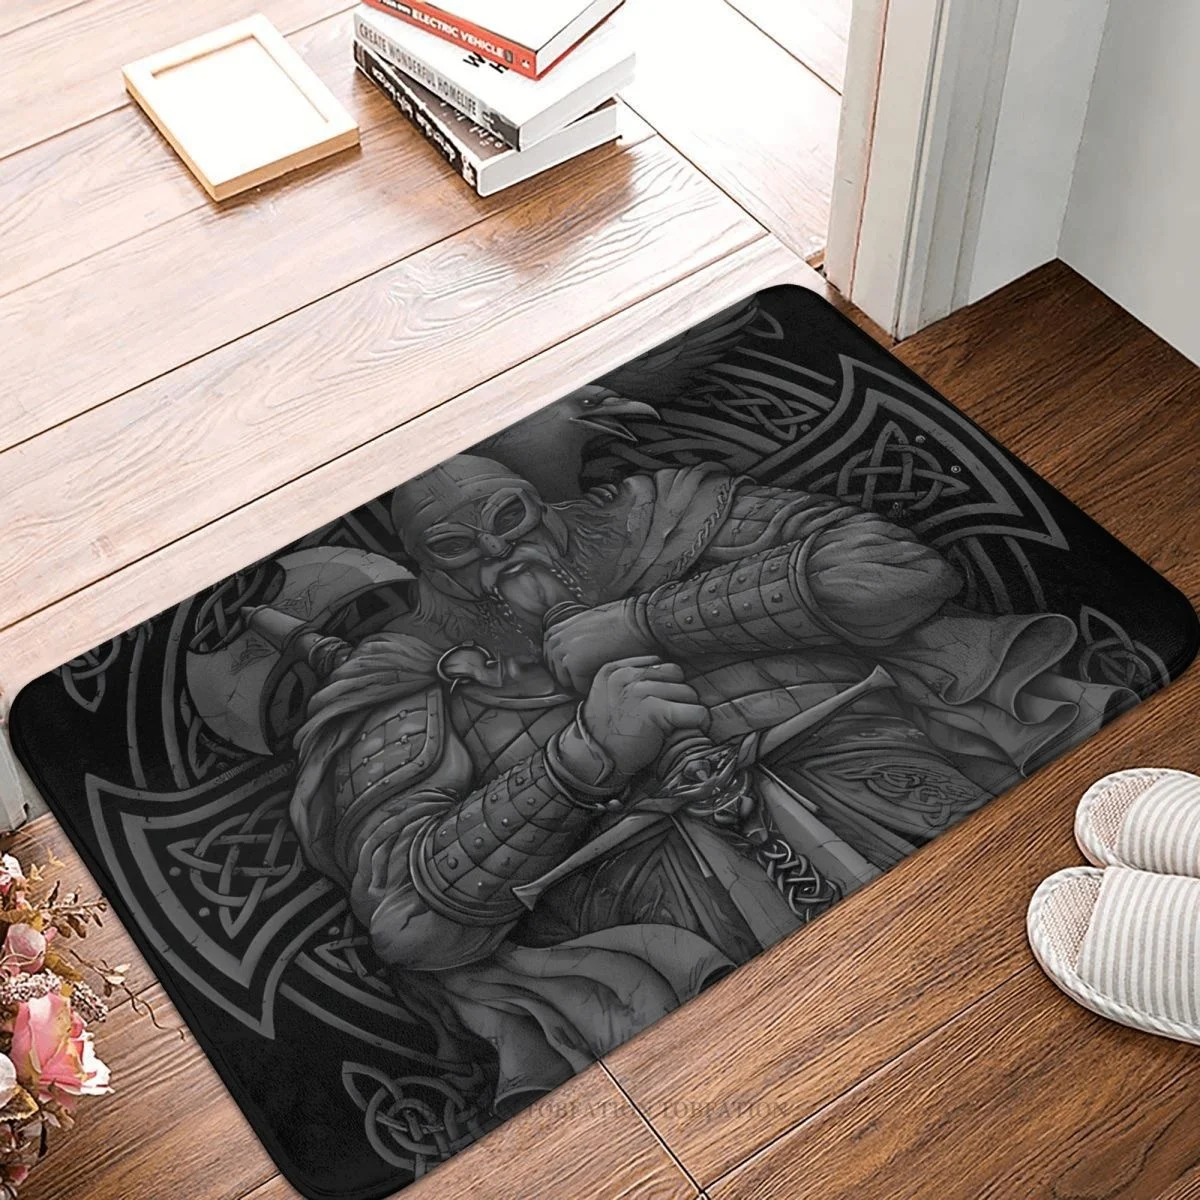 

TV Play Viking Bathroom Non-Slip Carpet Mythology Ravens Flannel Mat Welcome Doormat Home Decoration Rug